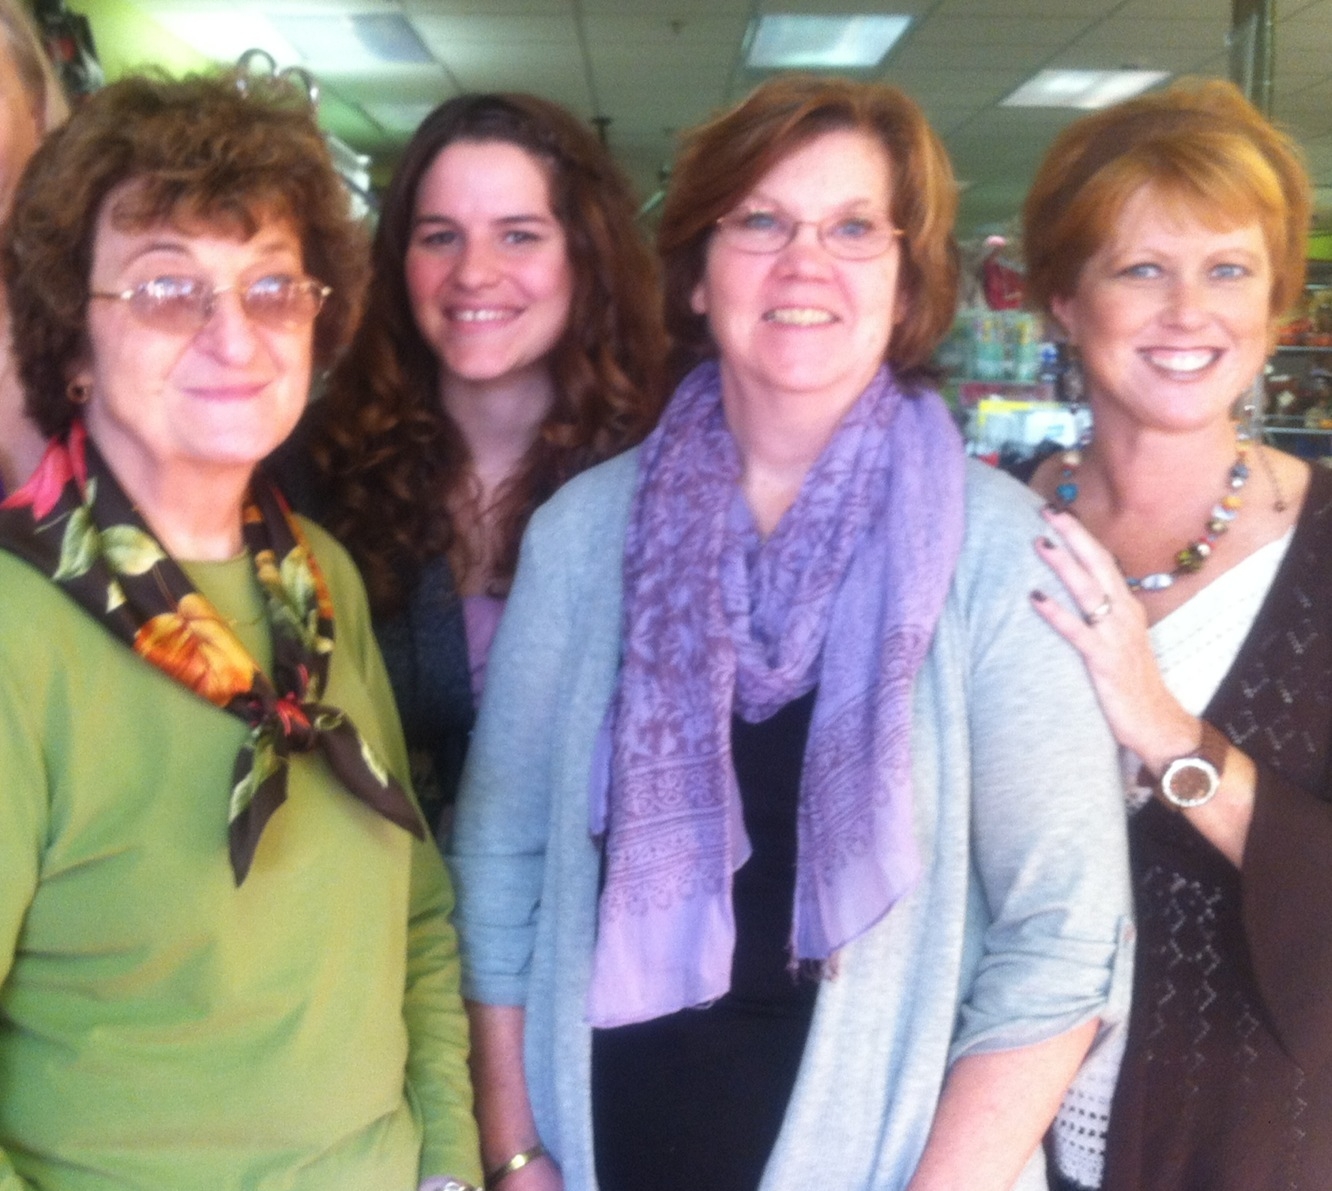 Heart And Home staffers Barbara Higgins, Clara Menton, Gail Mason and Karen Brakeley